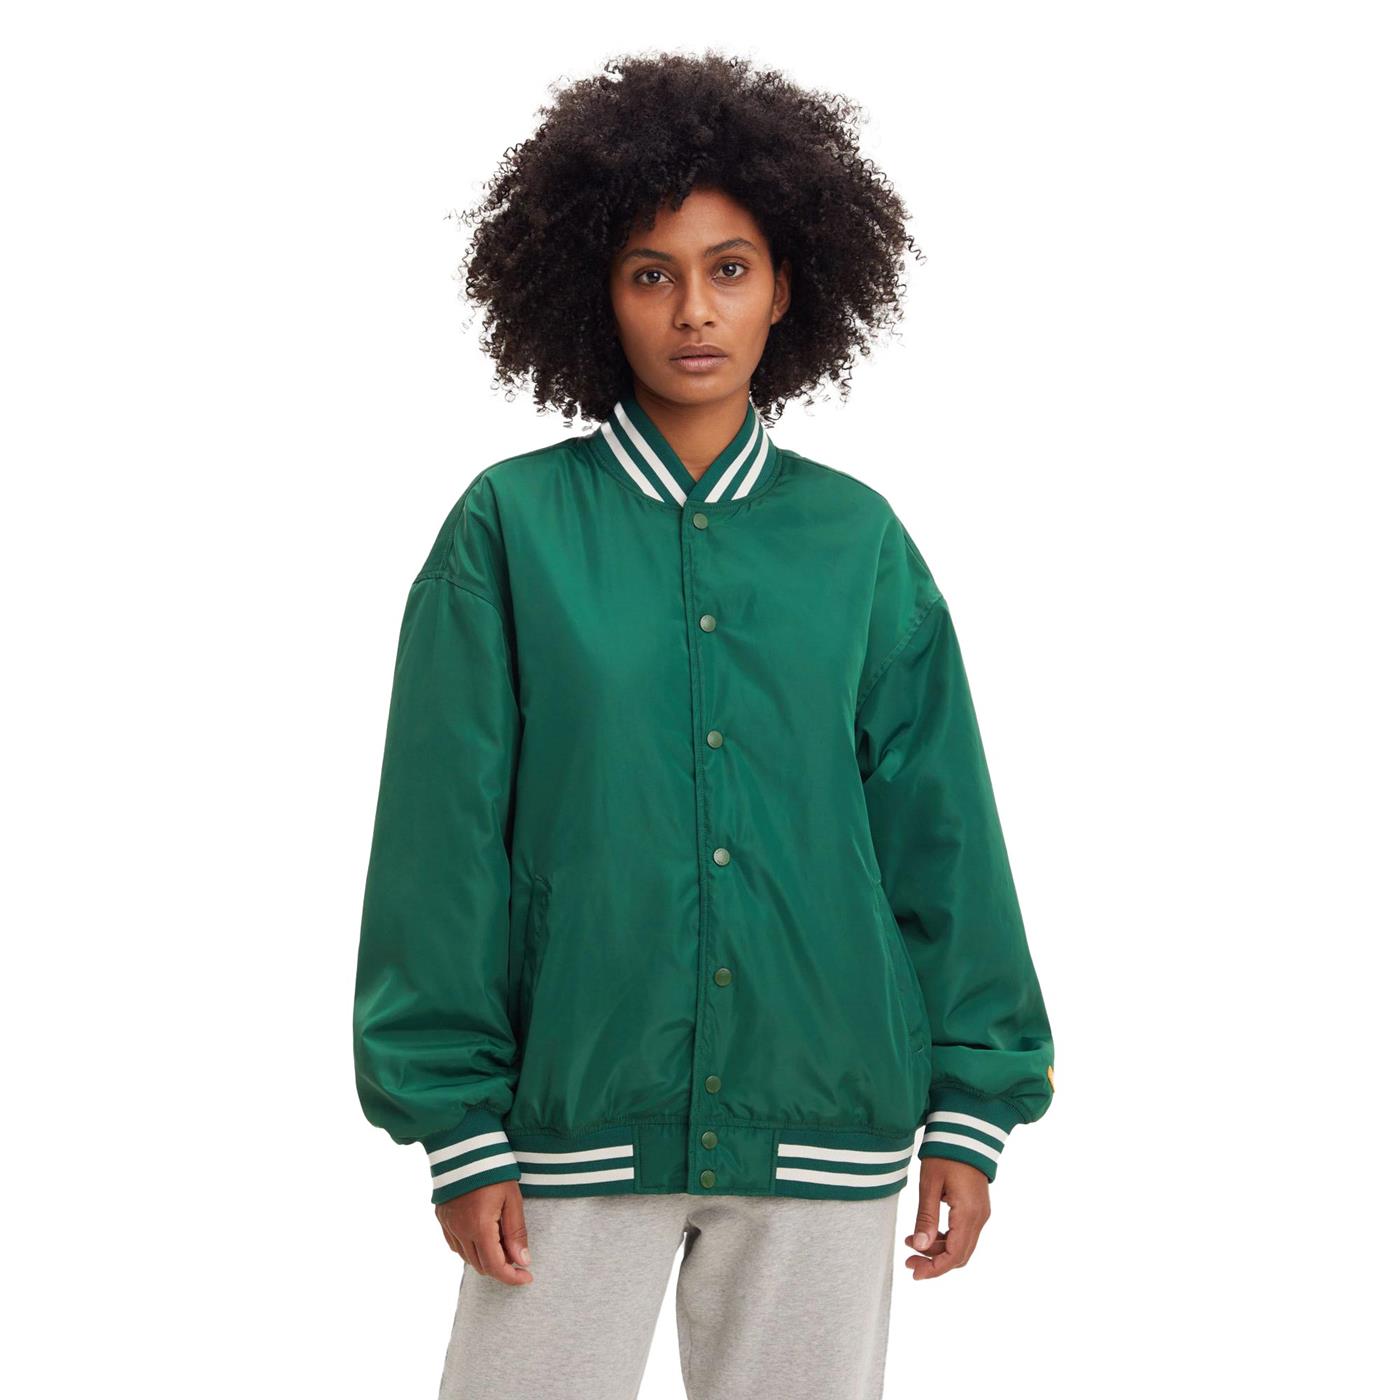 Jacket Levis Gold Tab Baseball Jacket Green for Woman | A3735-0001 |  